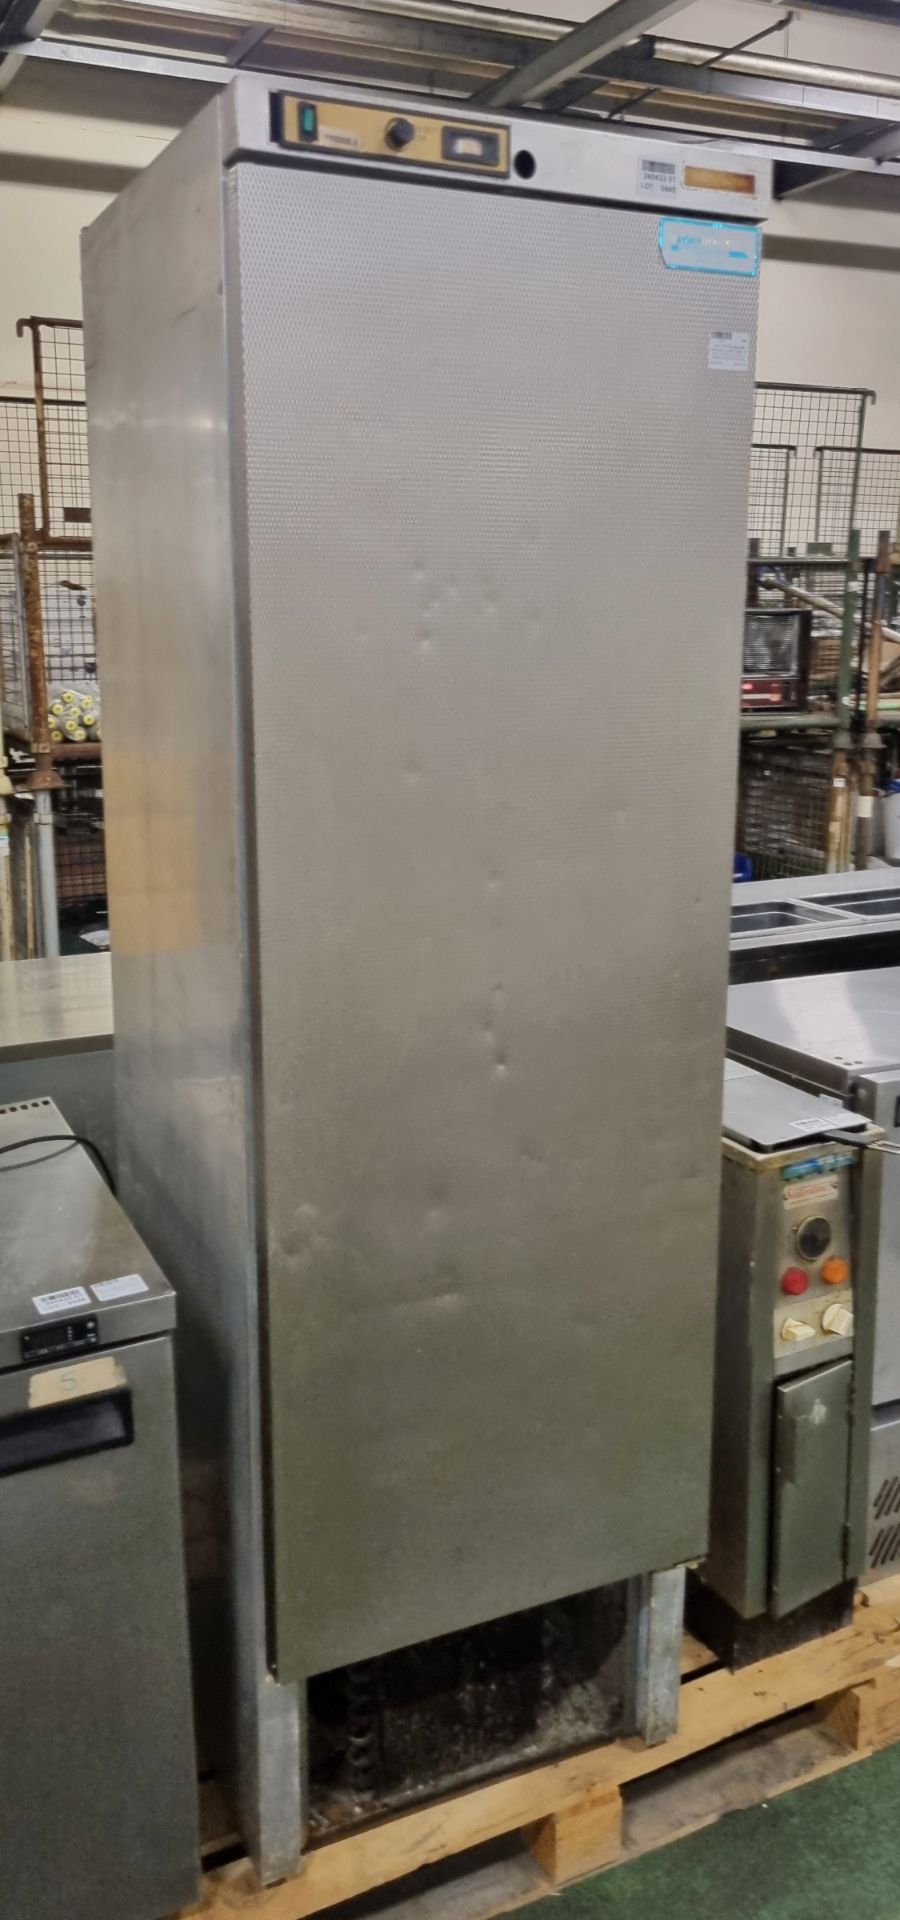 Gram K375 stainless steel single door upright fridge - W 600 x D 650 x H 1970mm - Image 2 of 5